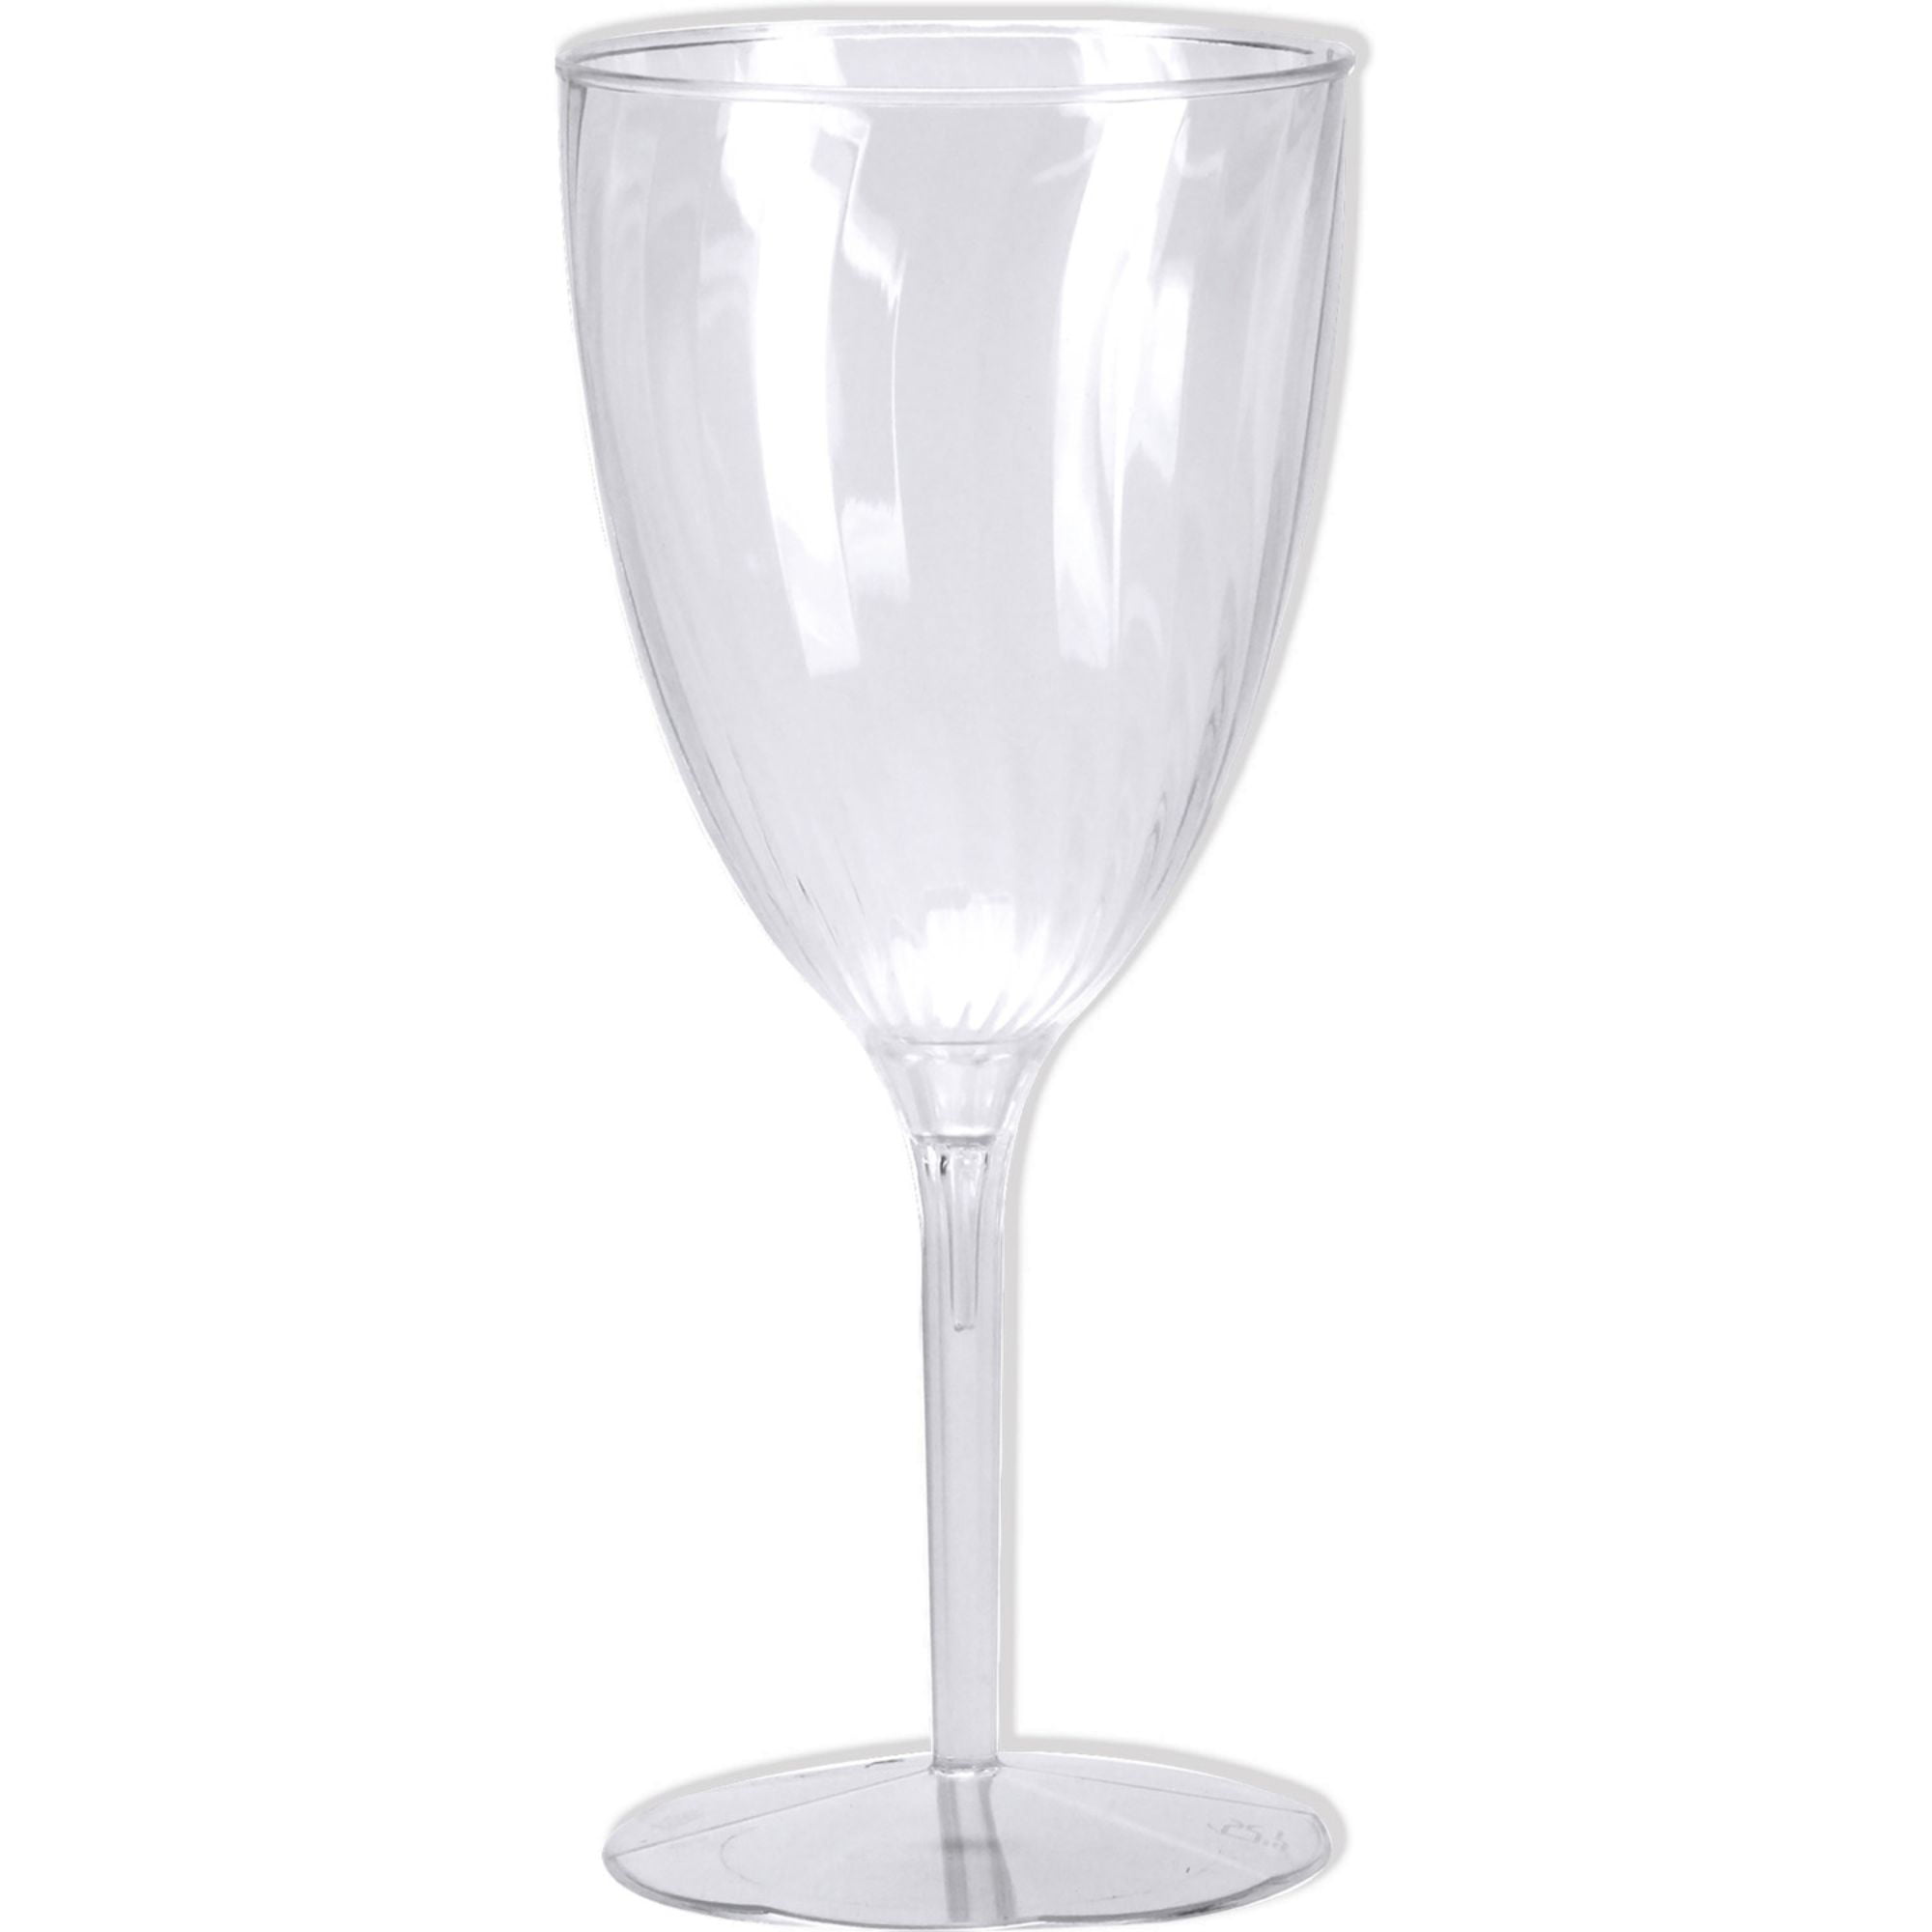 Efavormart 12 Pack 6.5 oz Plastic Wine Glasses Disposable 2-Piece Rose Gold Rimmed Design With Detachable Base